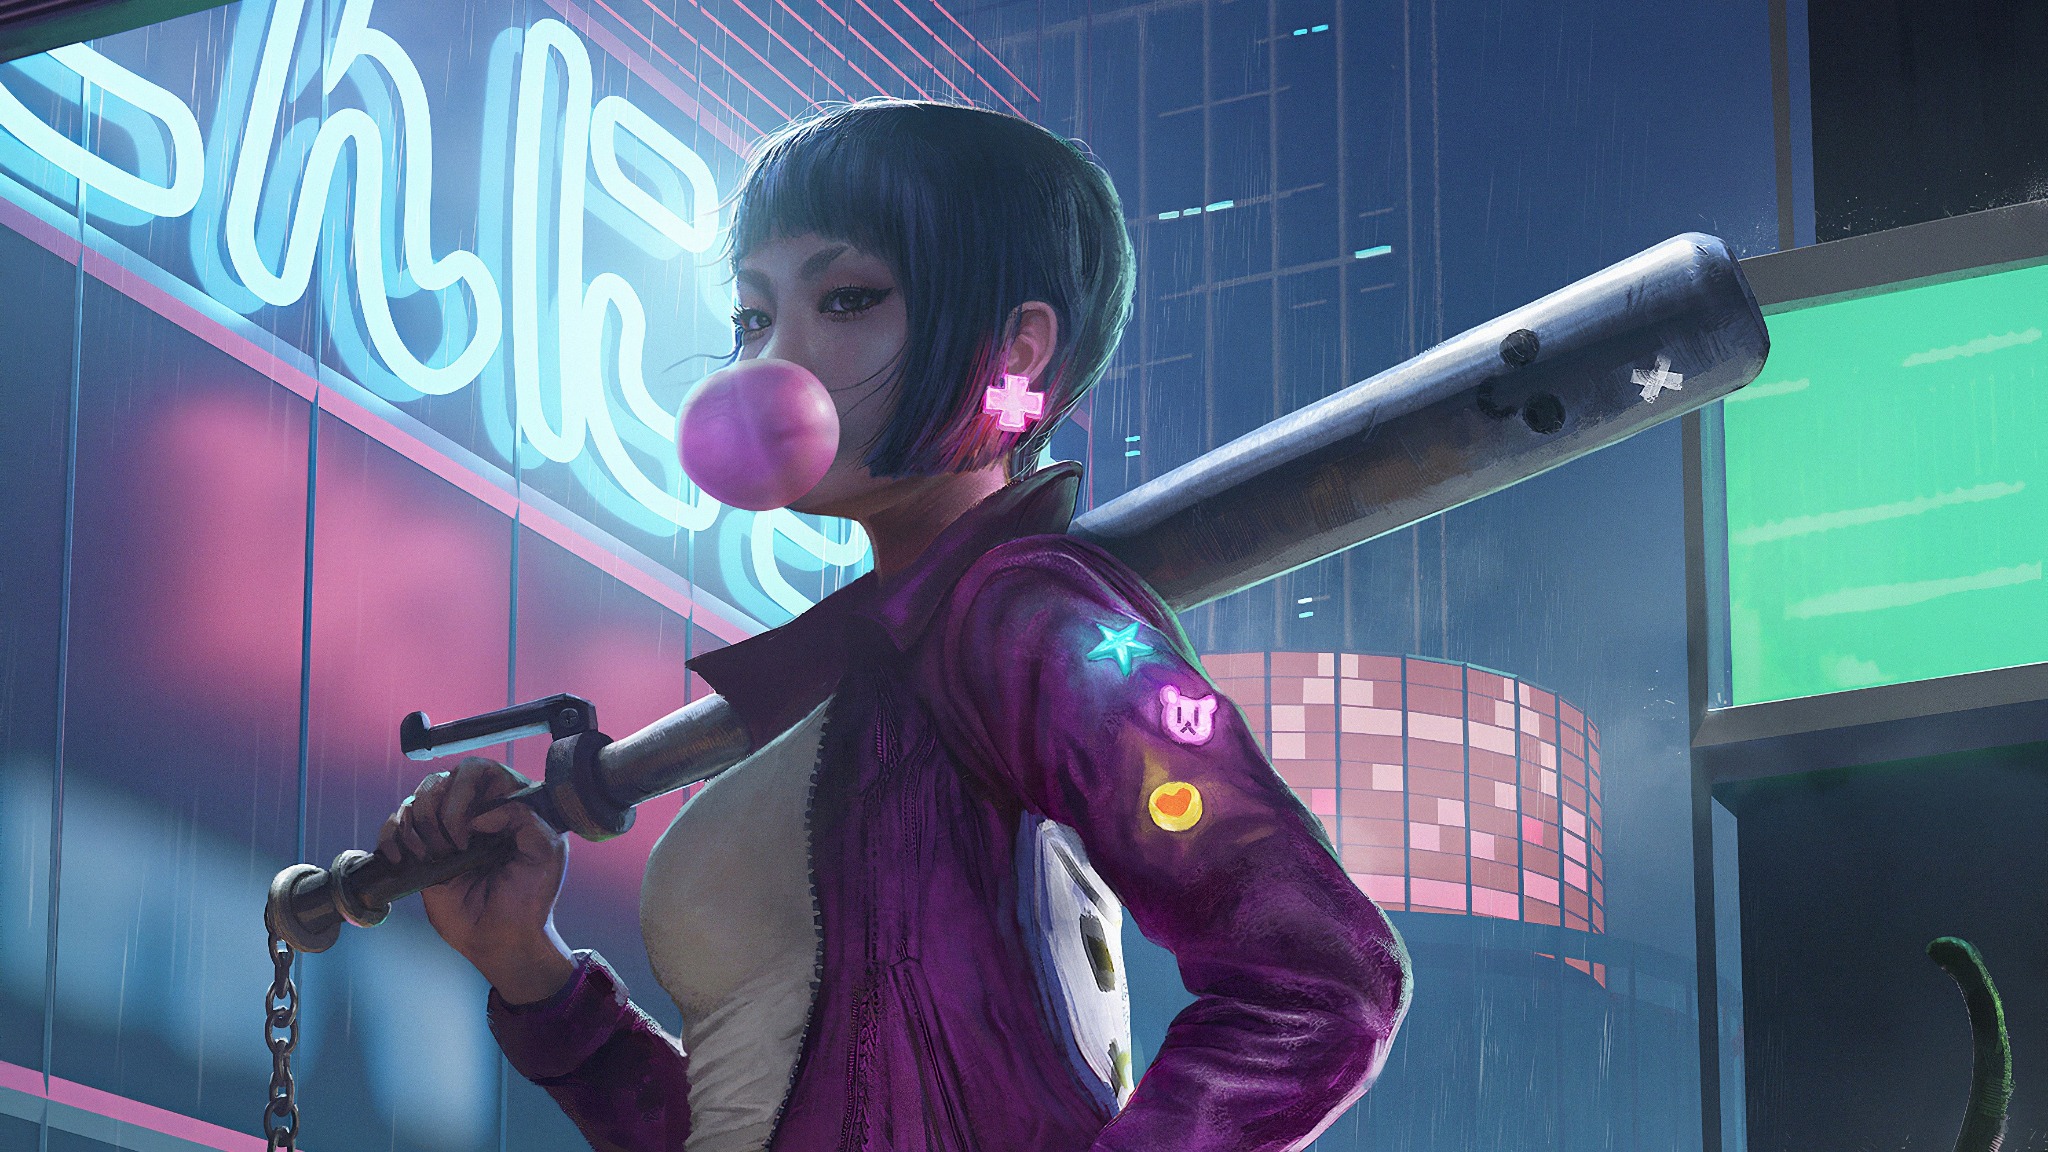 Brawl stars cyberpunk warrior with bubble gum and bat